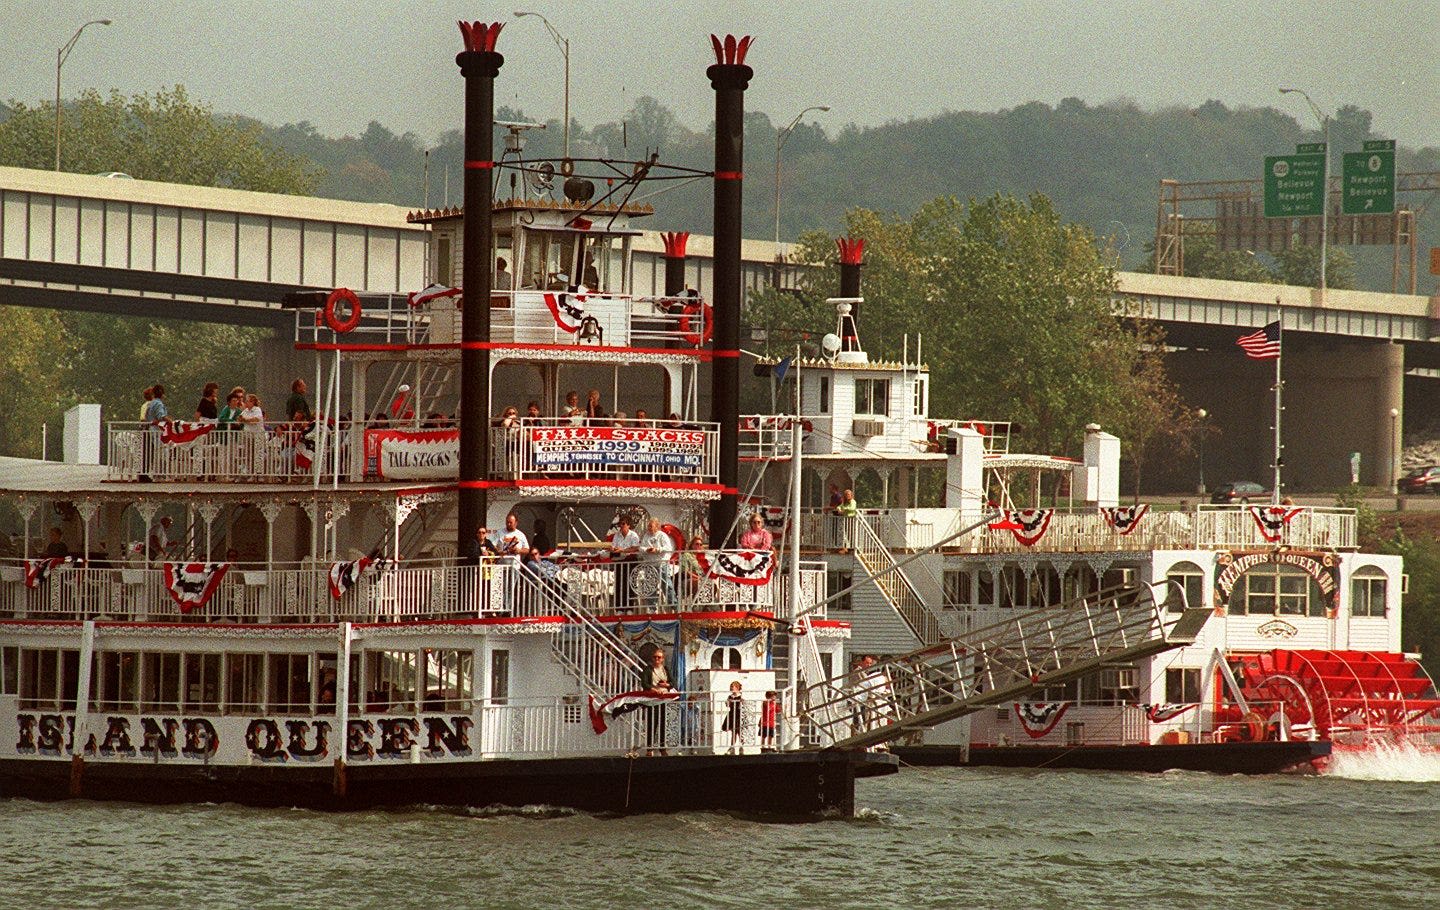 Tall Stacks took Cincinnati back to its flourishing steamboat era of the 1800s